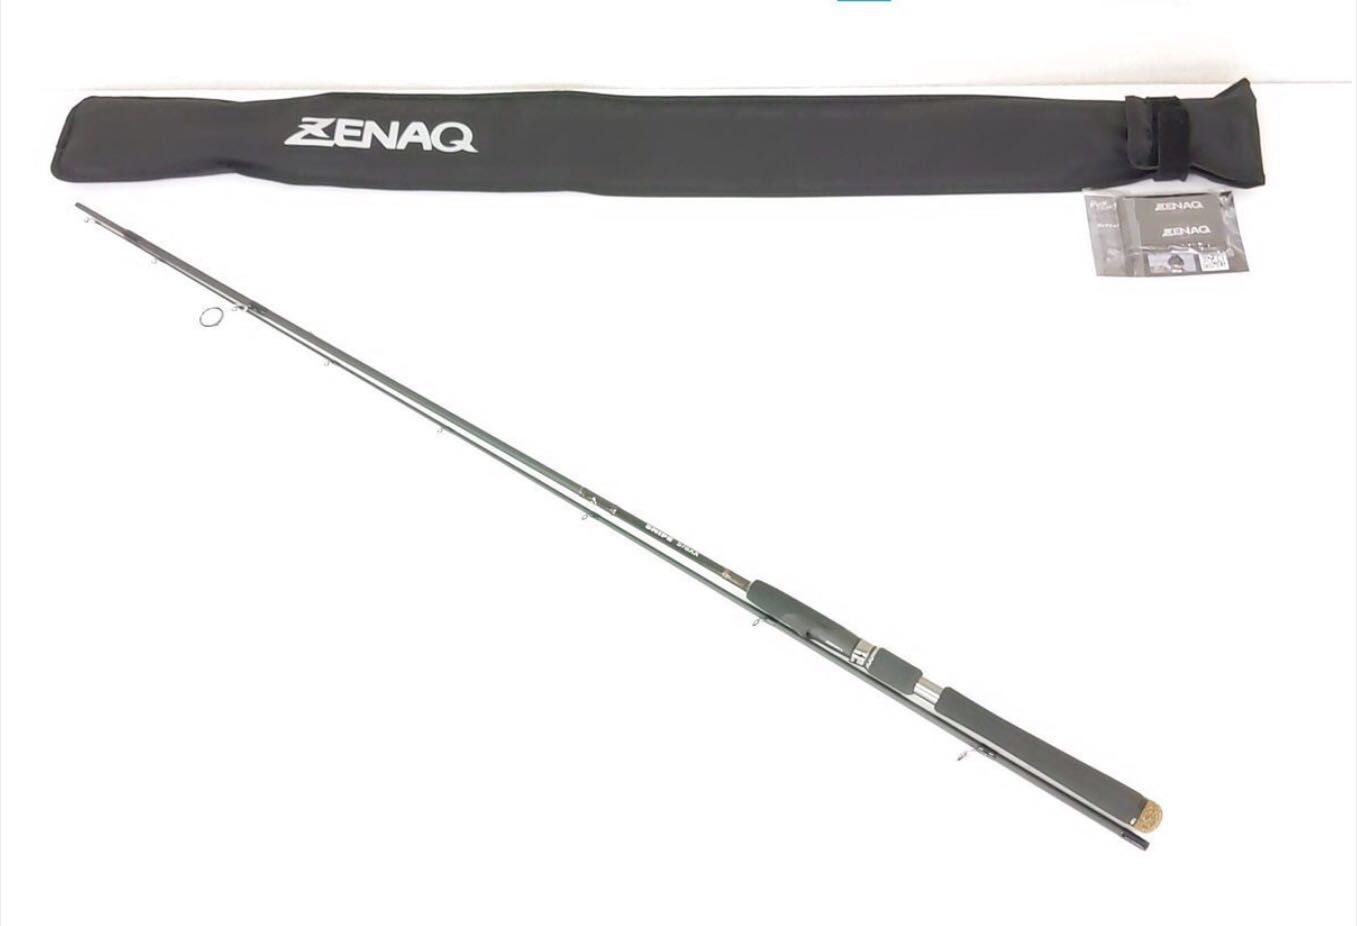 Zenaq PA90 RG, Zenaq Snipe 86RG, Zenaq Snipe 78 K, Made in Japan